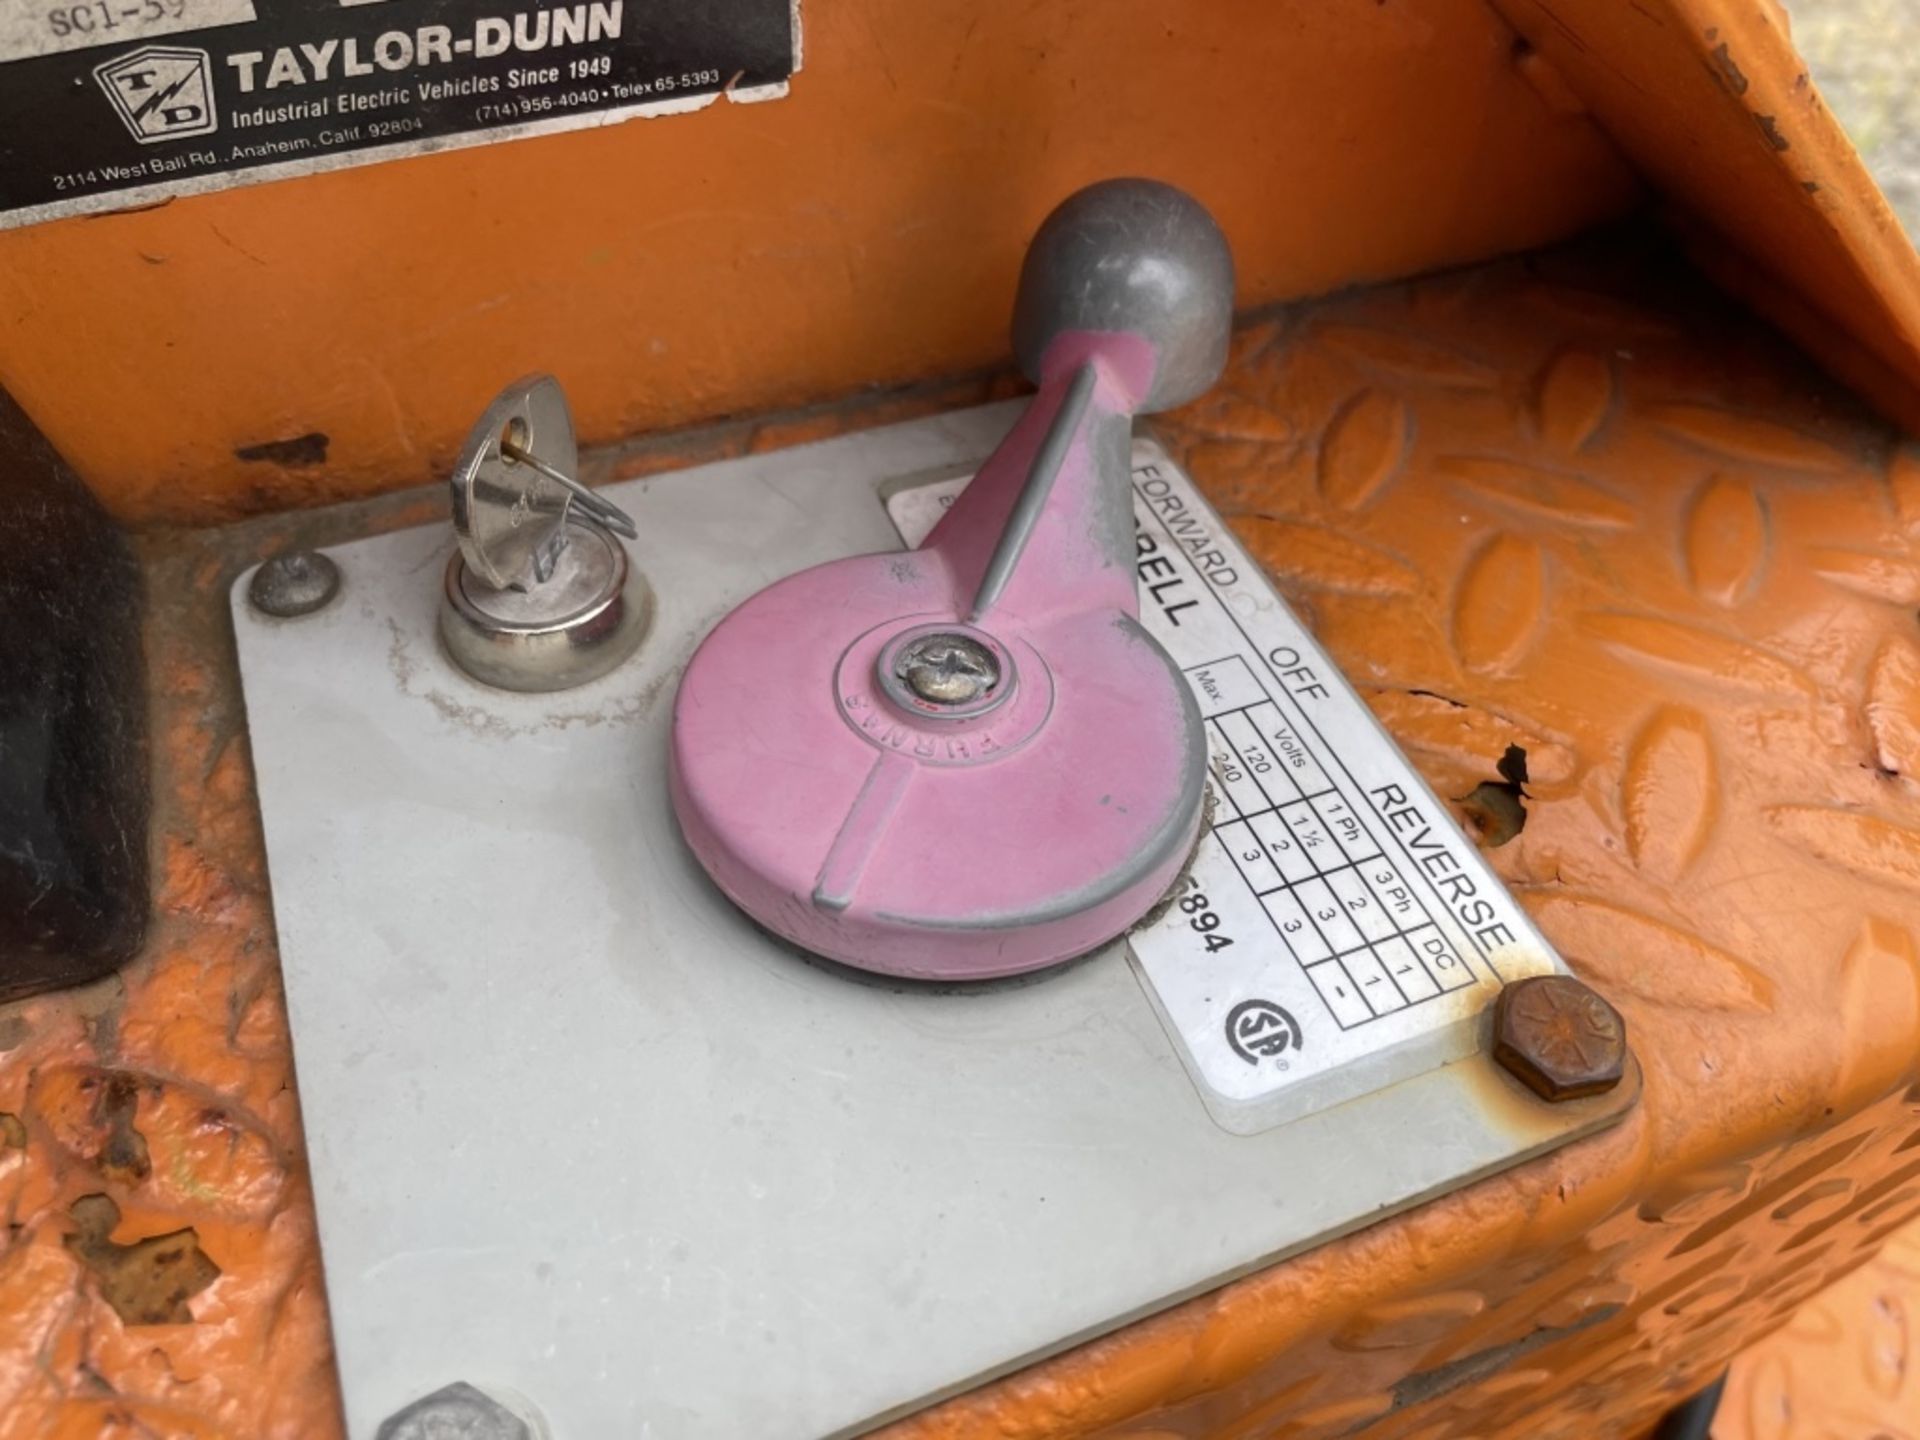 Taylor-Dunn SC1-59 Utility Carts - Image 8 of 9